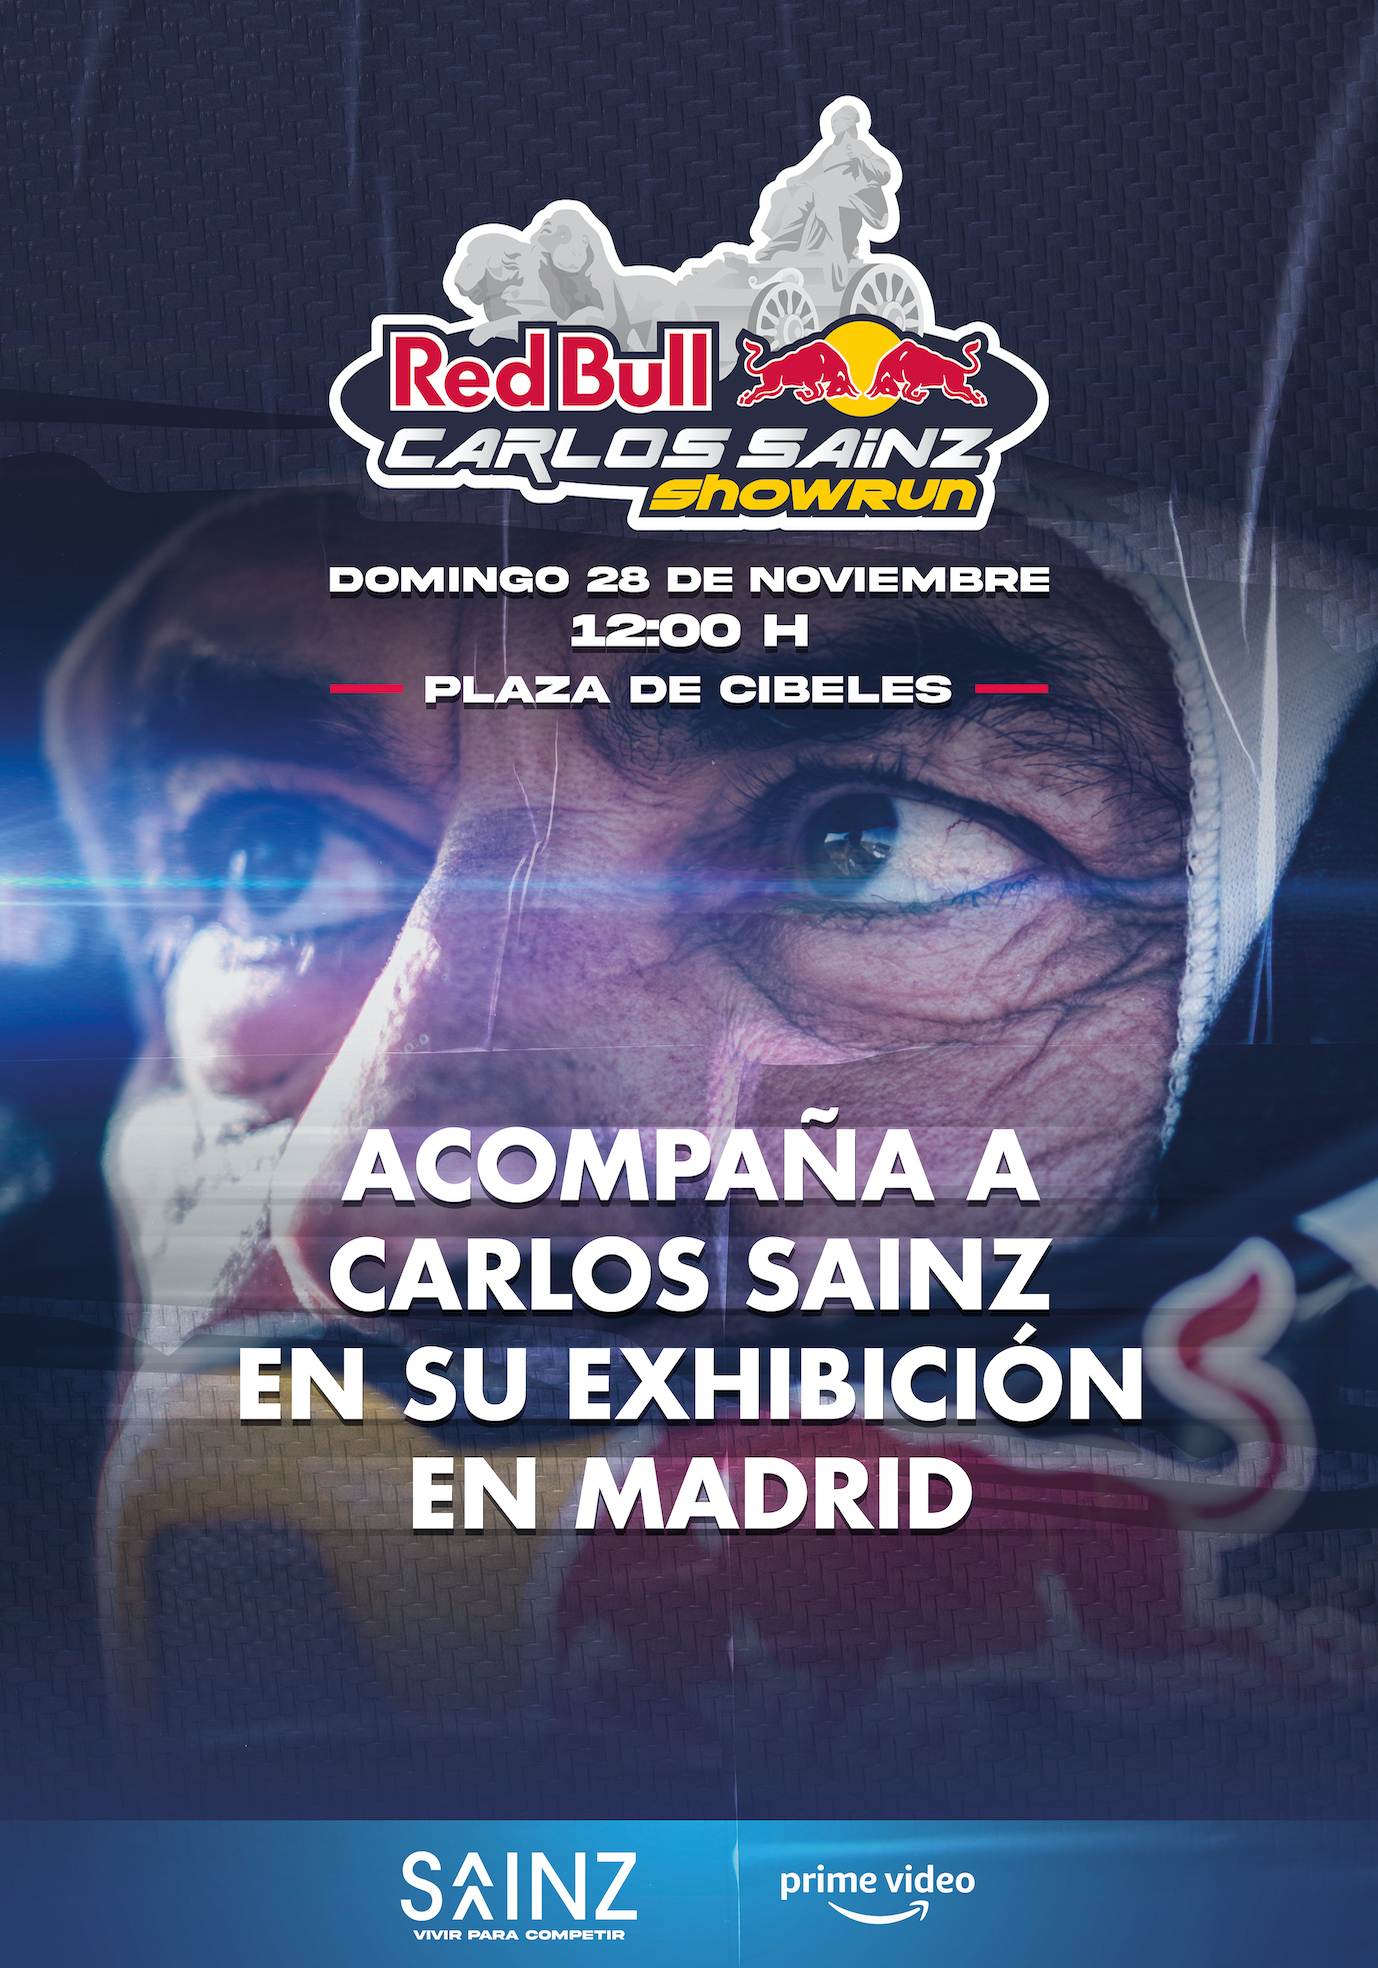 Cartel del Red Bull Carlos Sainz Show Run